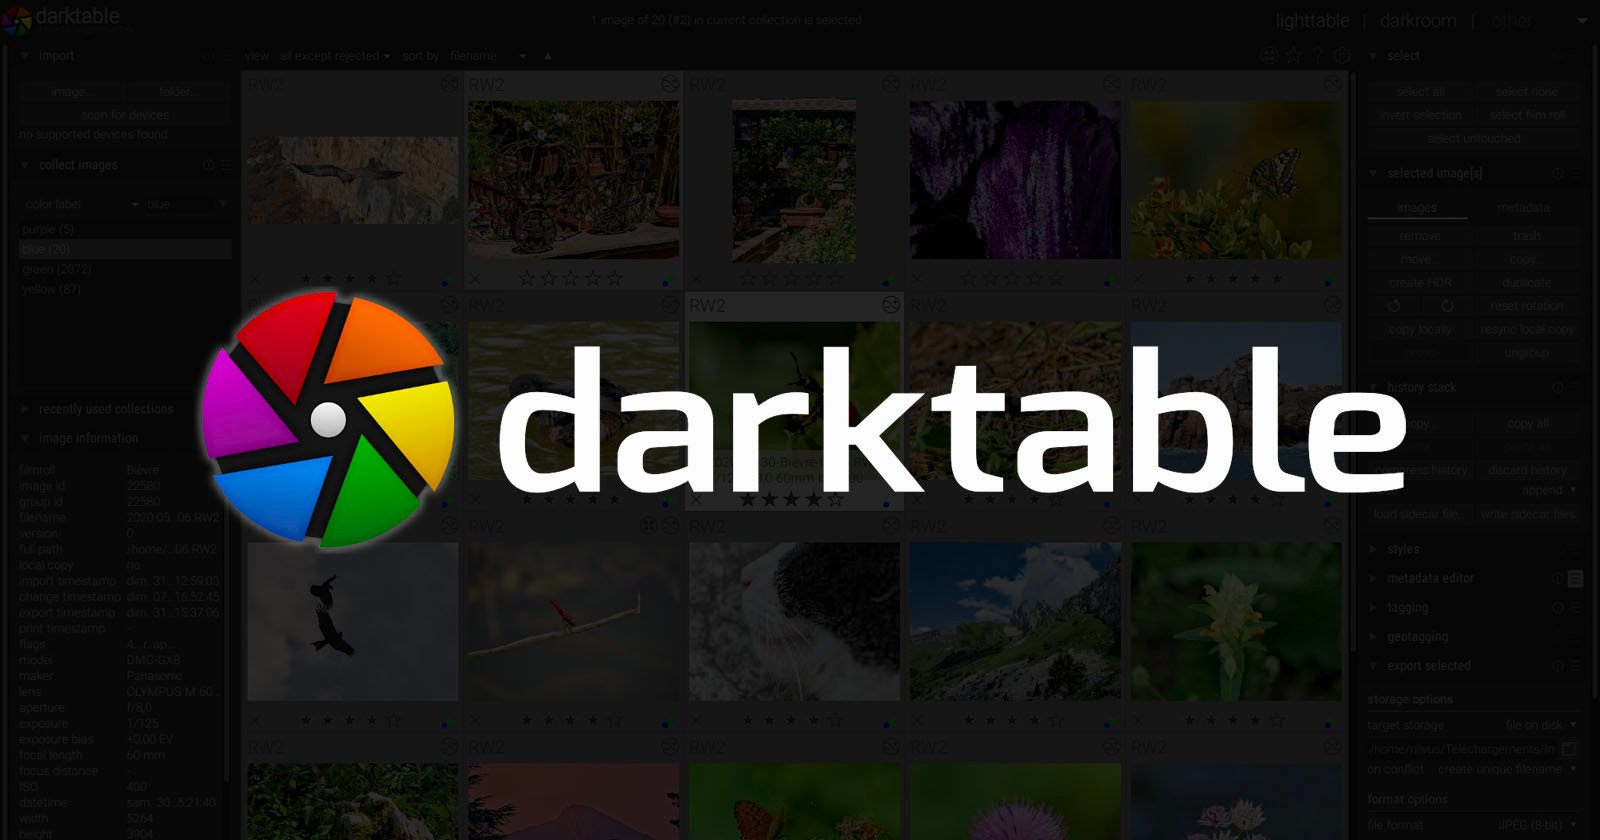  darktable makes free lightroom alternative even better 